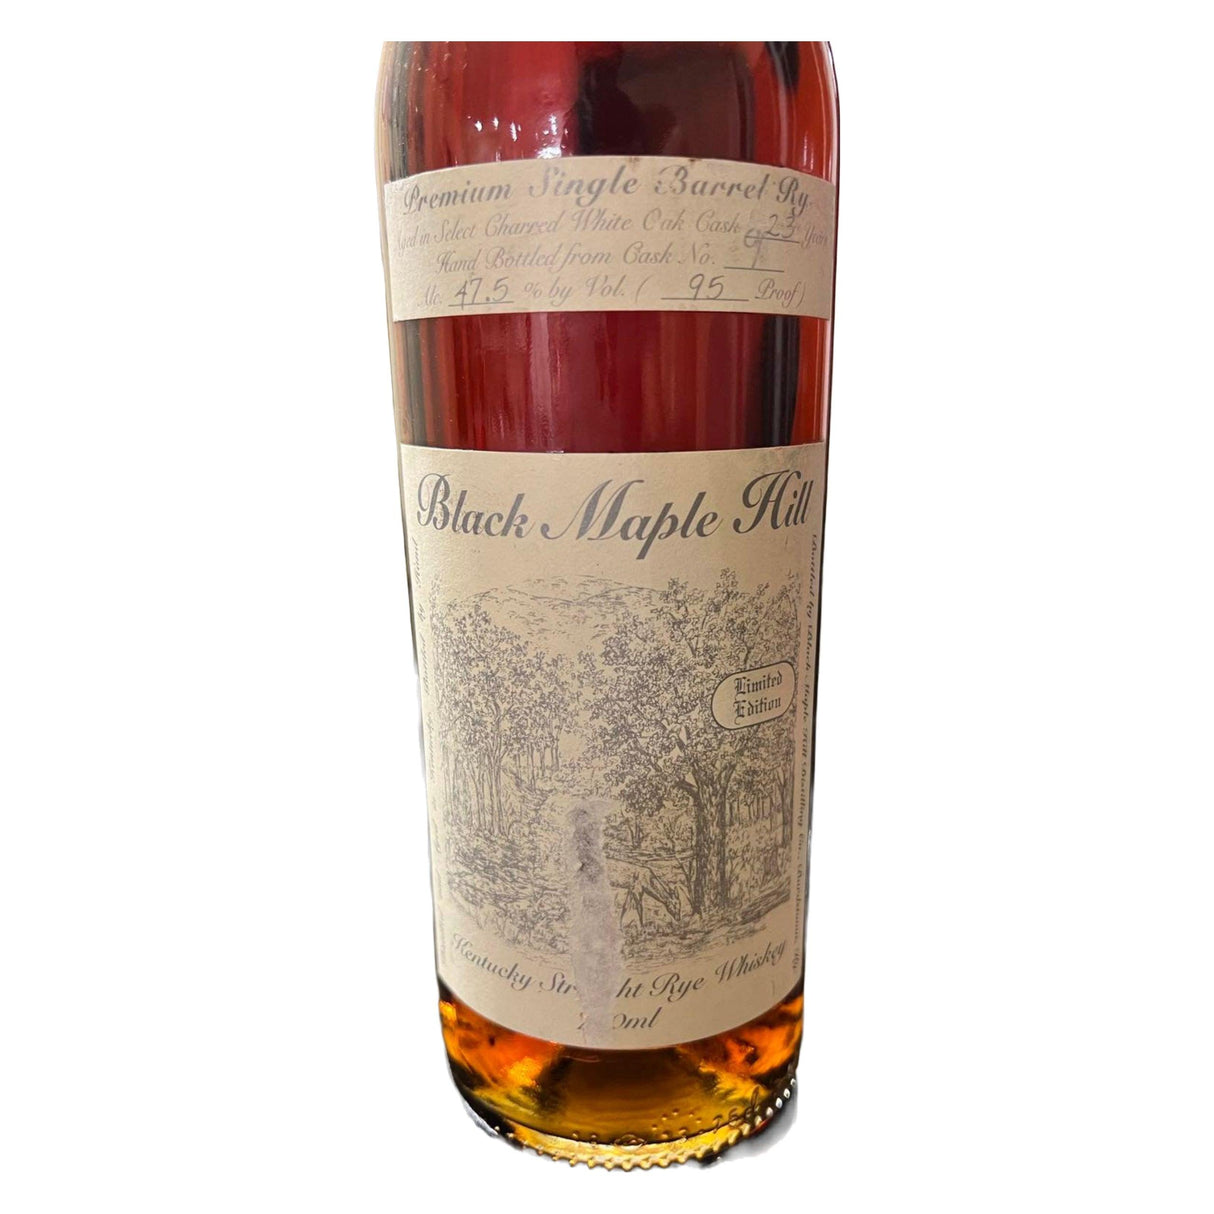 Black Maple Hill Single Barrel 23 Year Rye Whiskey - De Wine Spot | DWS - Drams/Whiskey, Wines, Sake